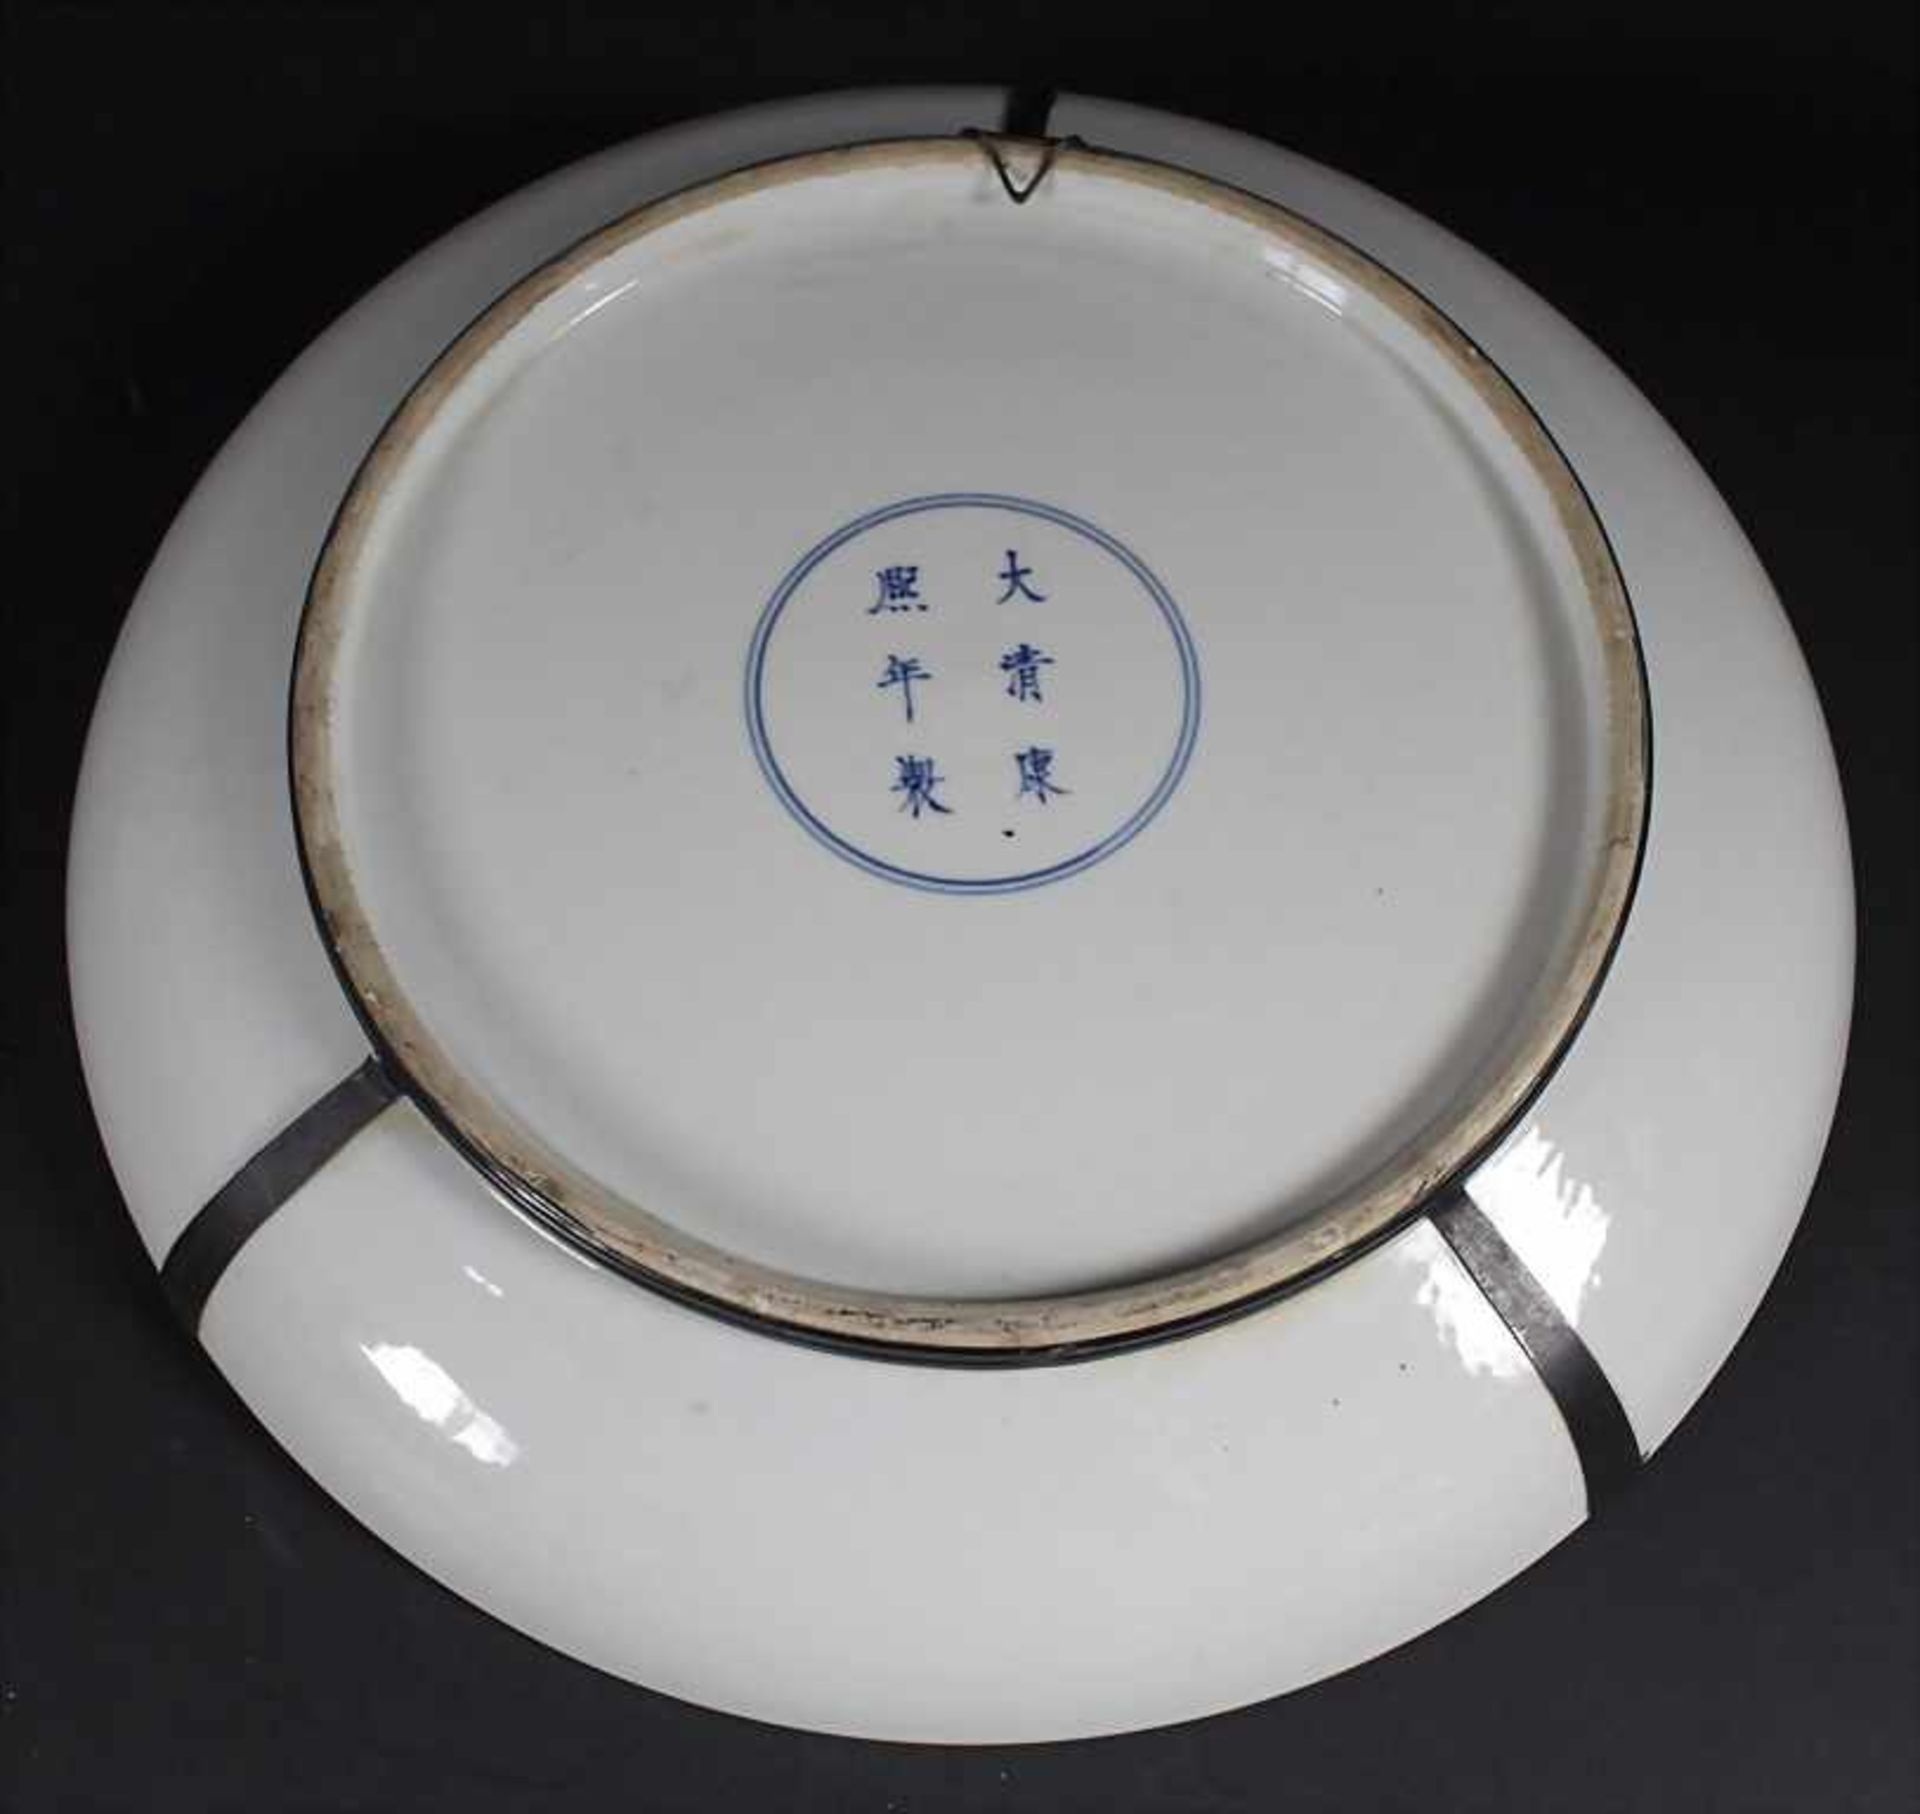 Große Rundplatte / A large round porcelain platter, China, Marke Qianlong, wohl 19. Jh. - Image 5 of 6